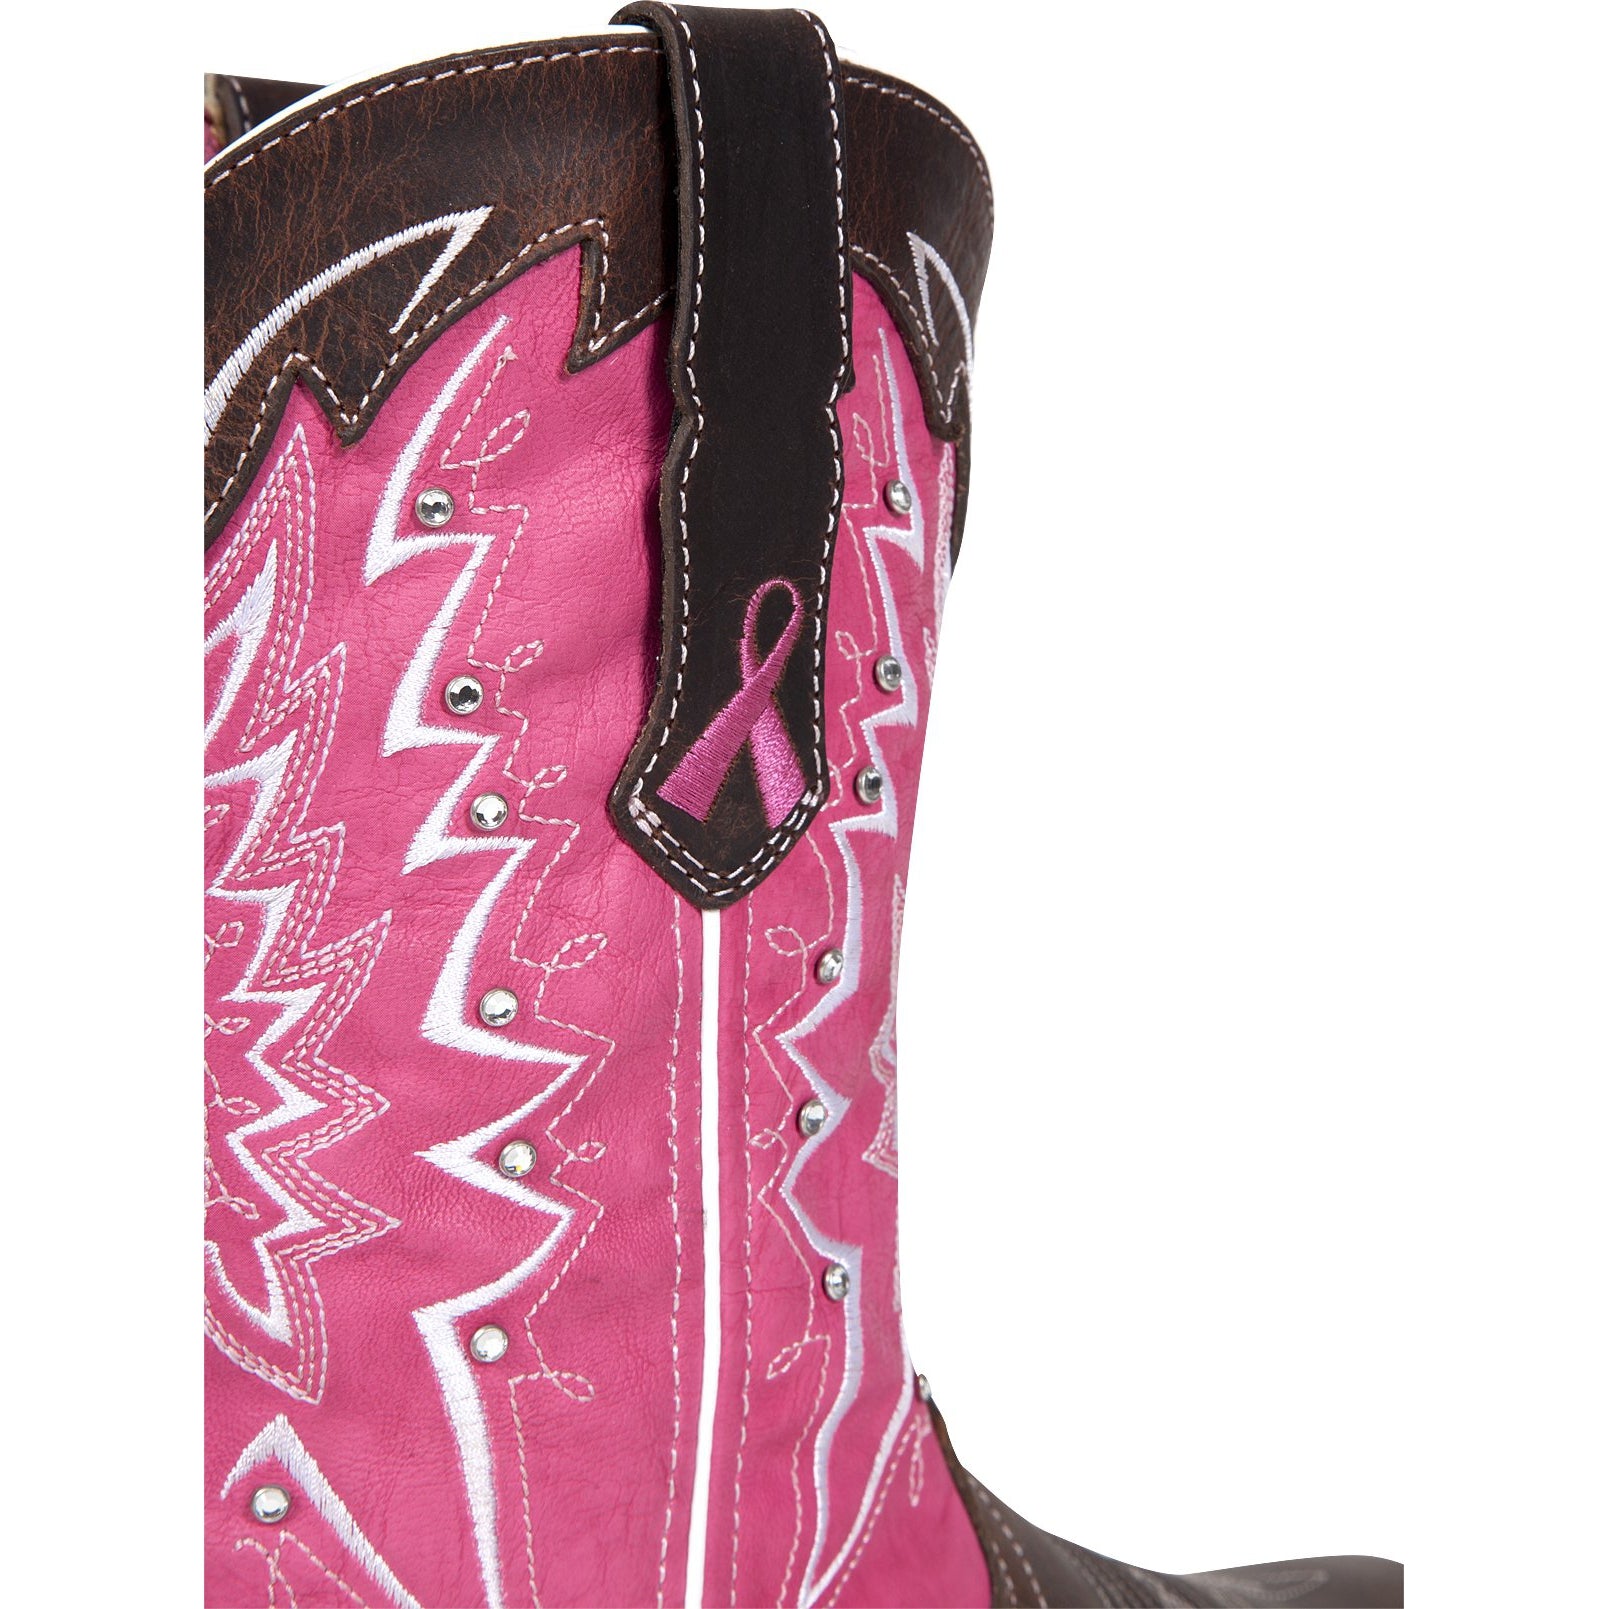 Durango Women's Benefiting Stefanie Spielman Square Toe Western Boot  - Overlook Boots